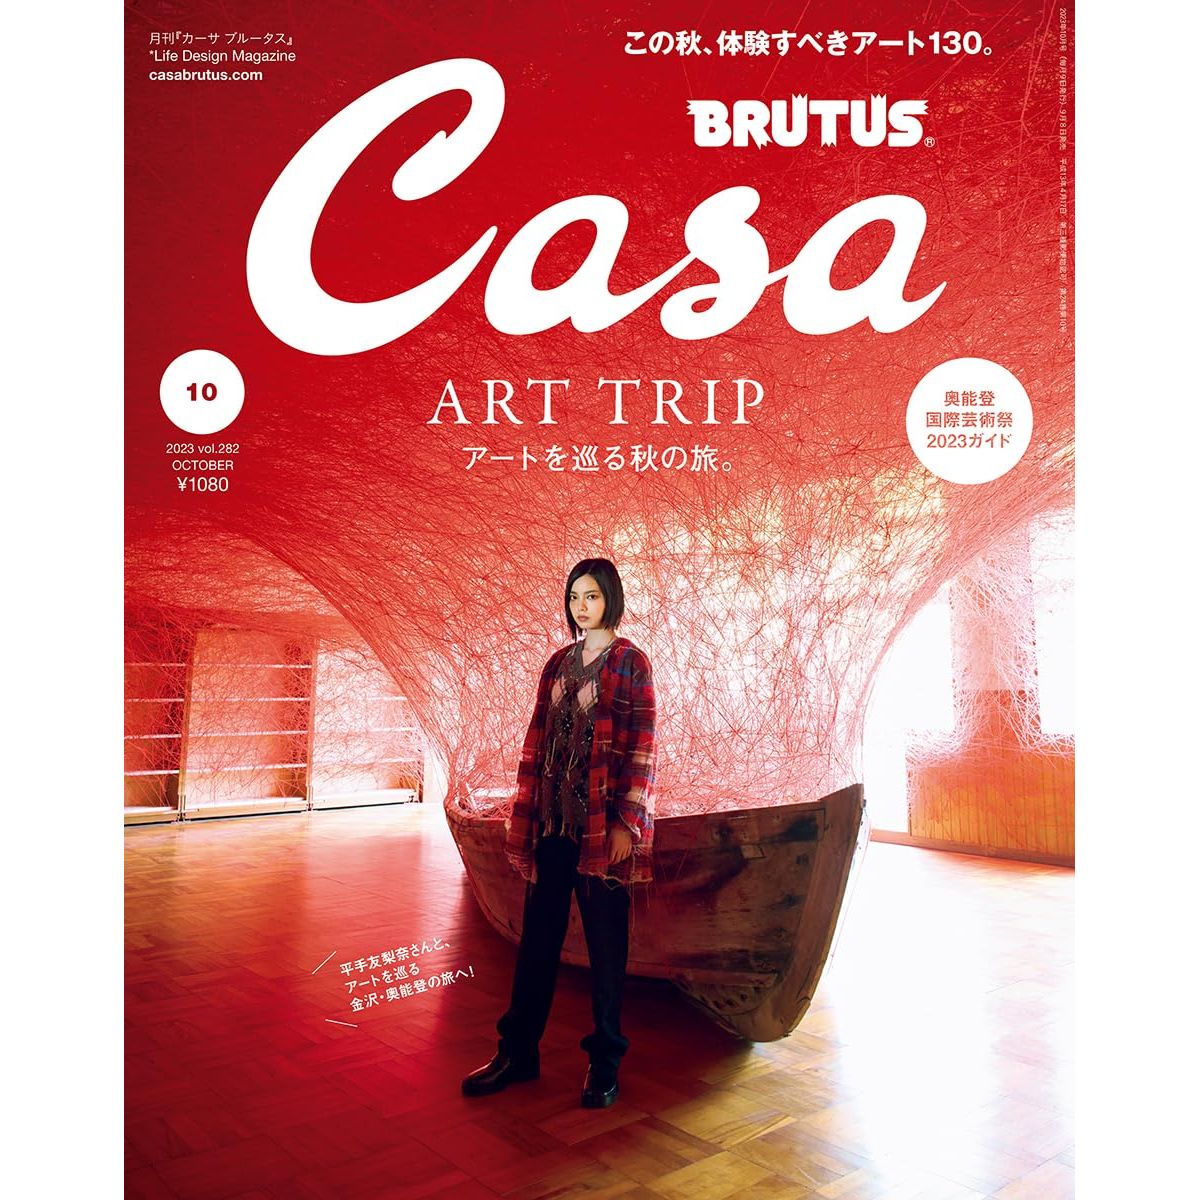 Brutus Art Trip